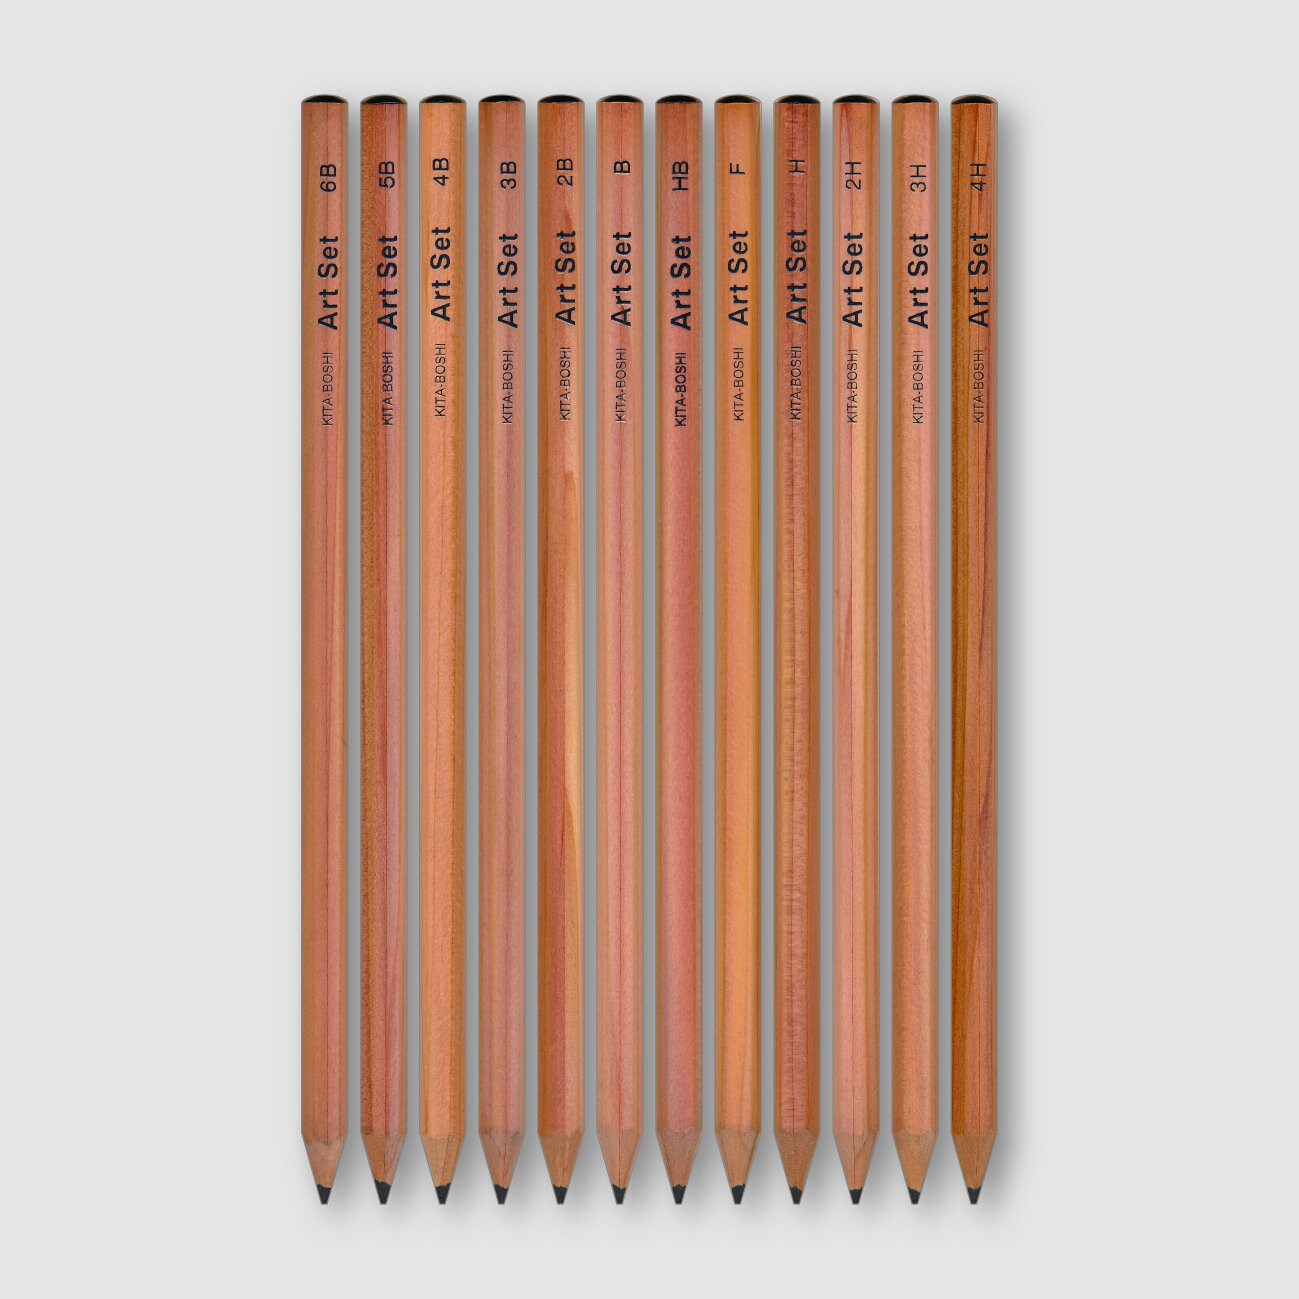 KITABOSHI 9352 Red Marking Pencils 12 Pack Made in Japan 